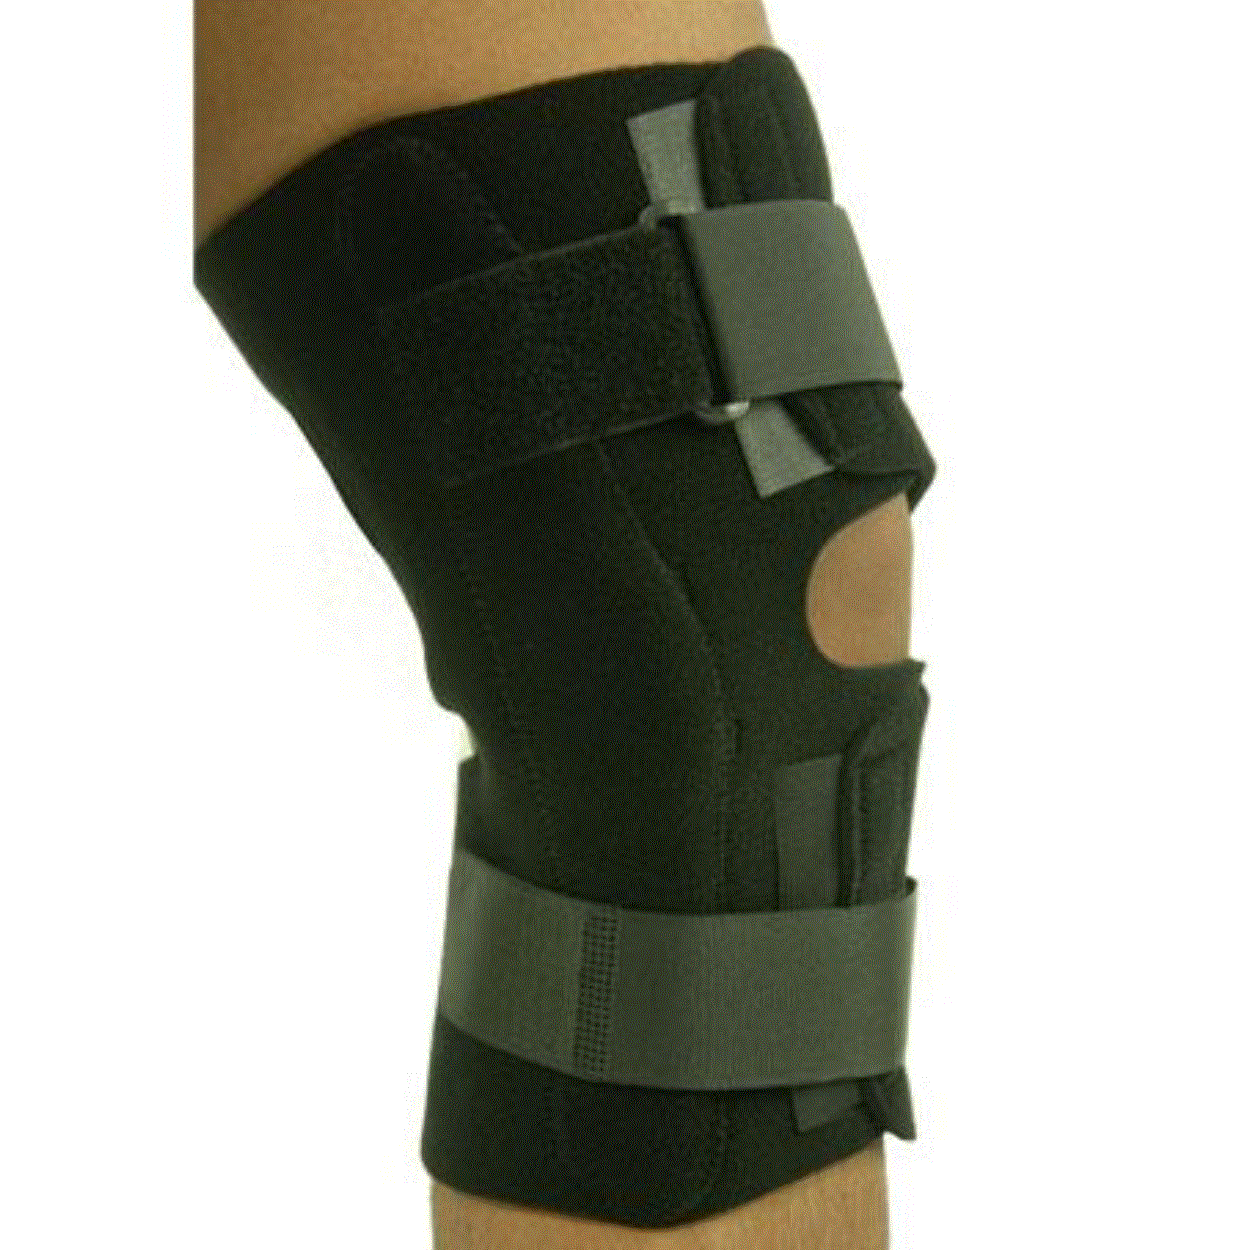 Comfortland Universal Hinged Wraparound Knee Brace $60.00/Each Danco Medical CK-120